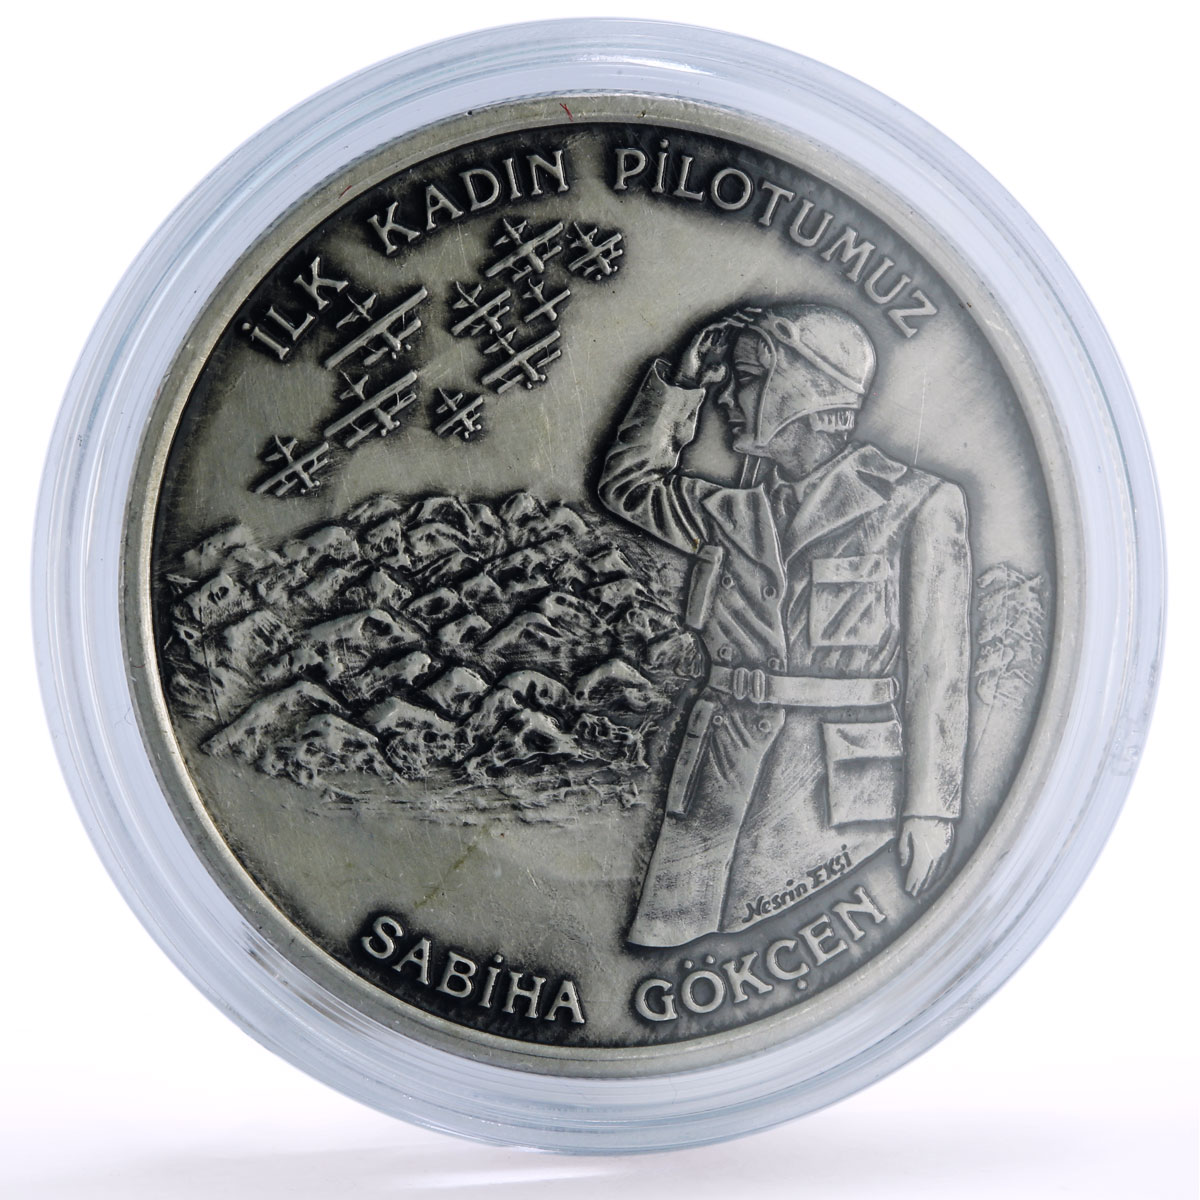 Turkey 7500000 lira Female Pilot Sabiha Gokcen Planes Aviation silver coin 2000